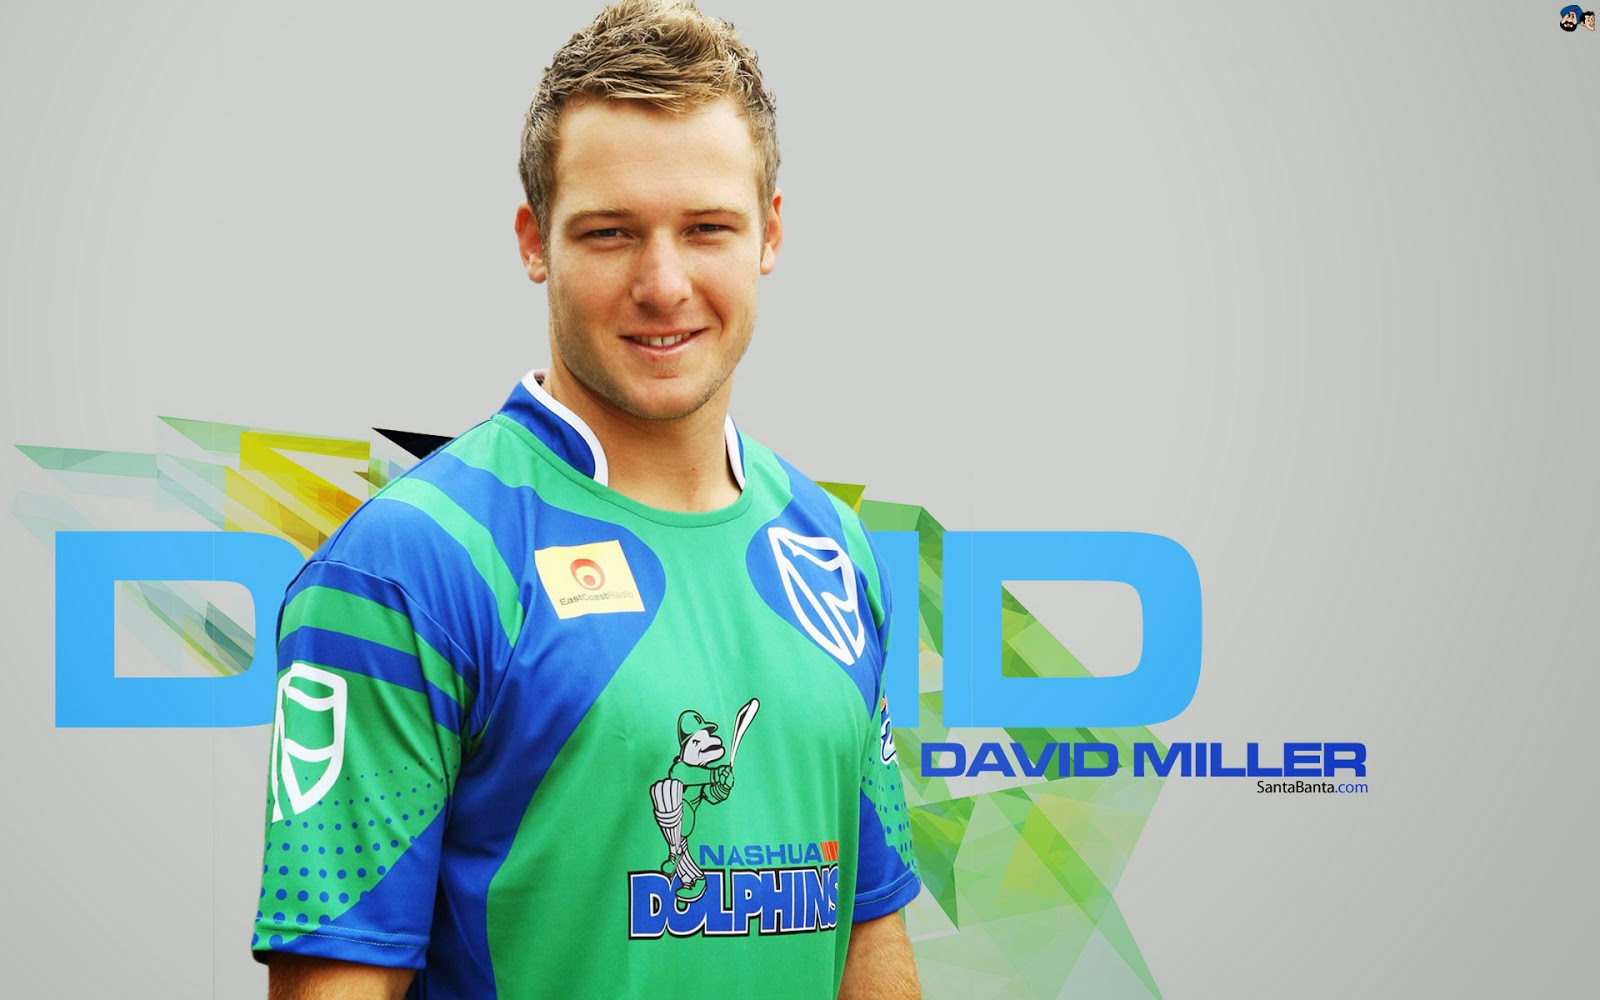 David Miller cricketer. David Miller Muckup.